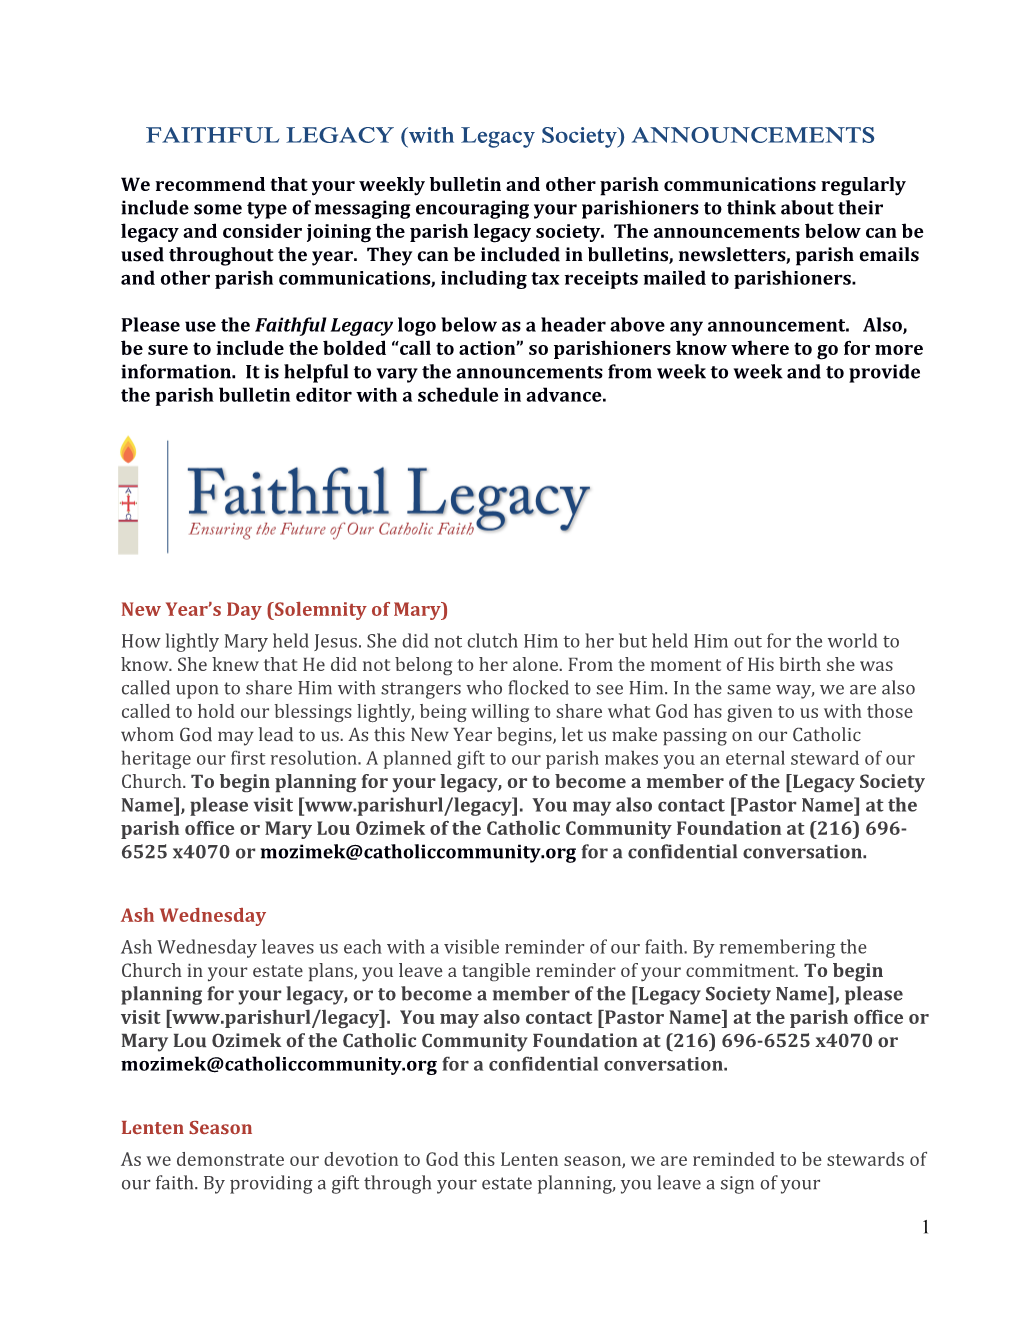 FAITHFUL LEGACY (With Legacy Society) ANNOUNCEMENTS